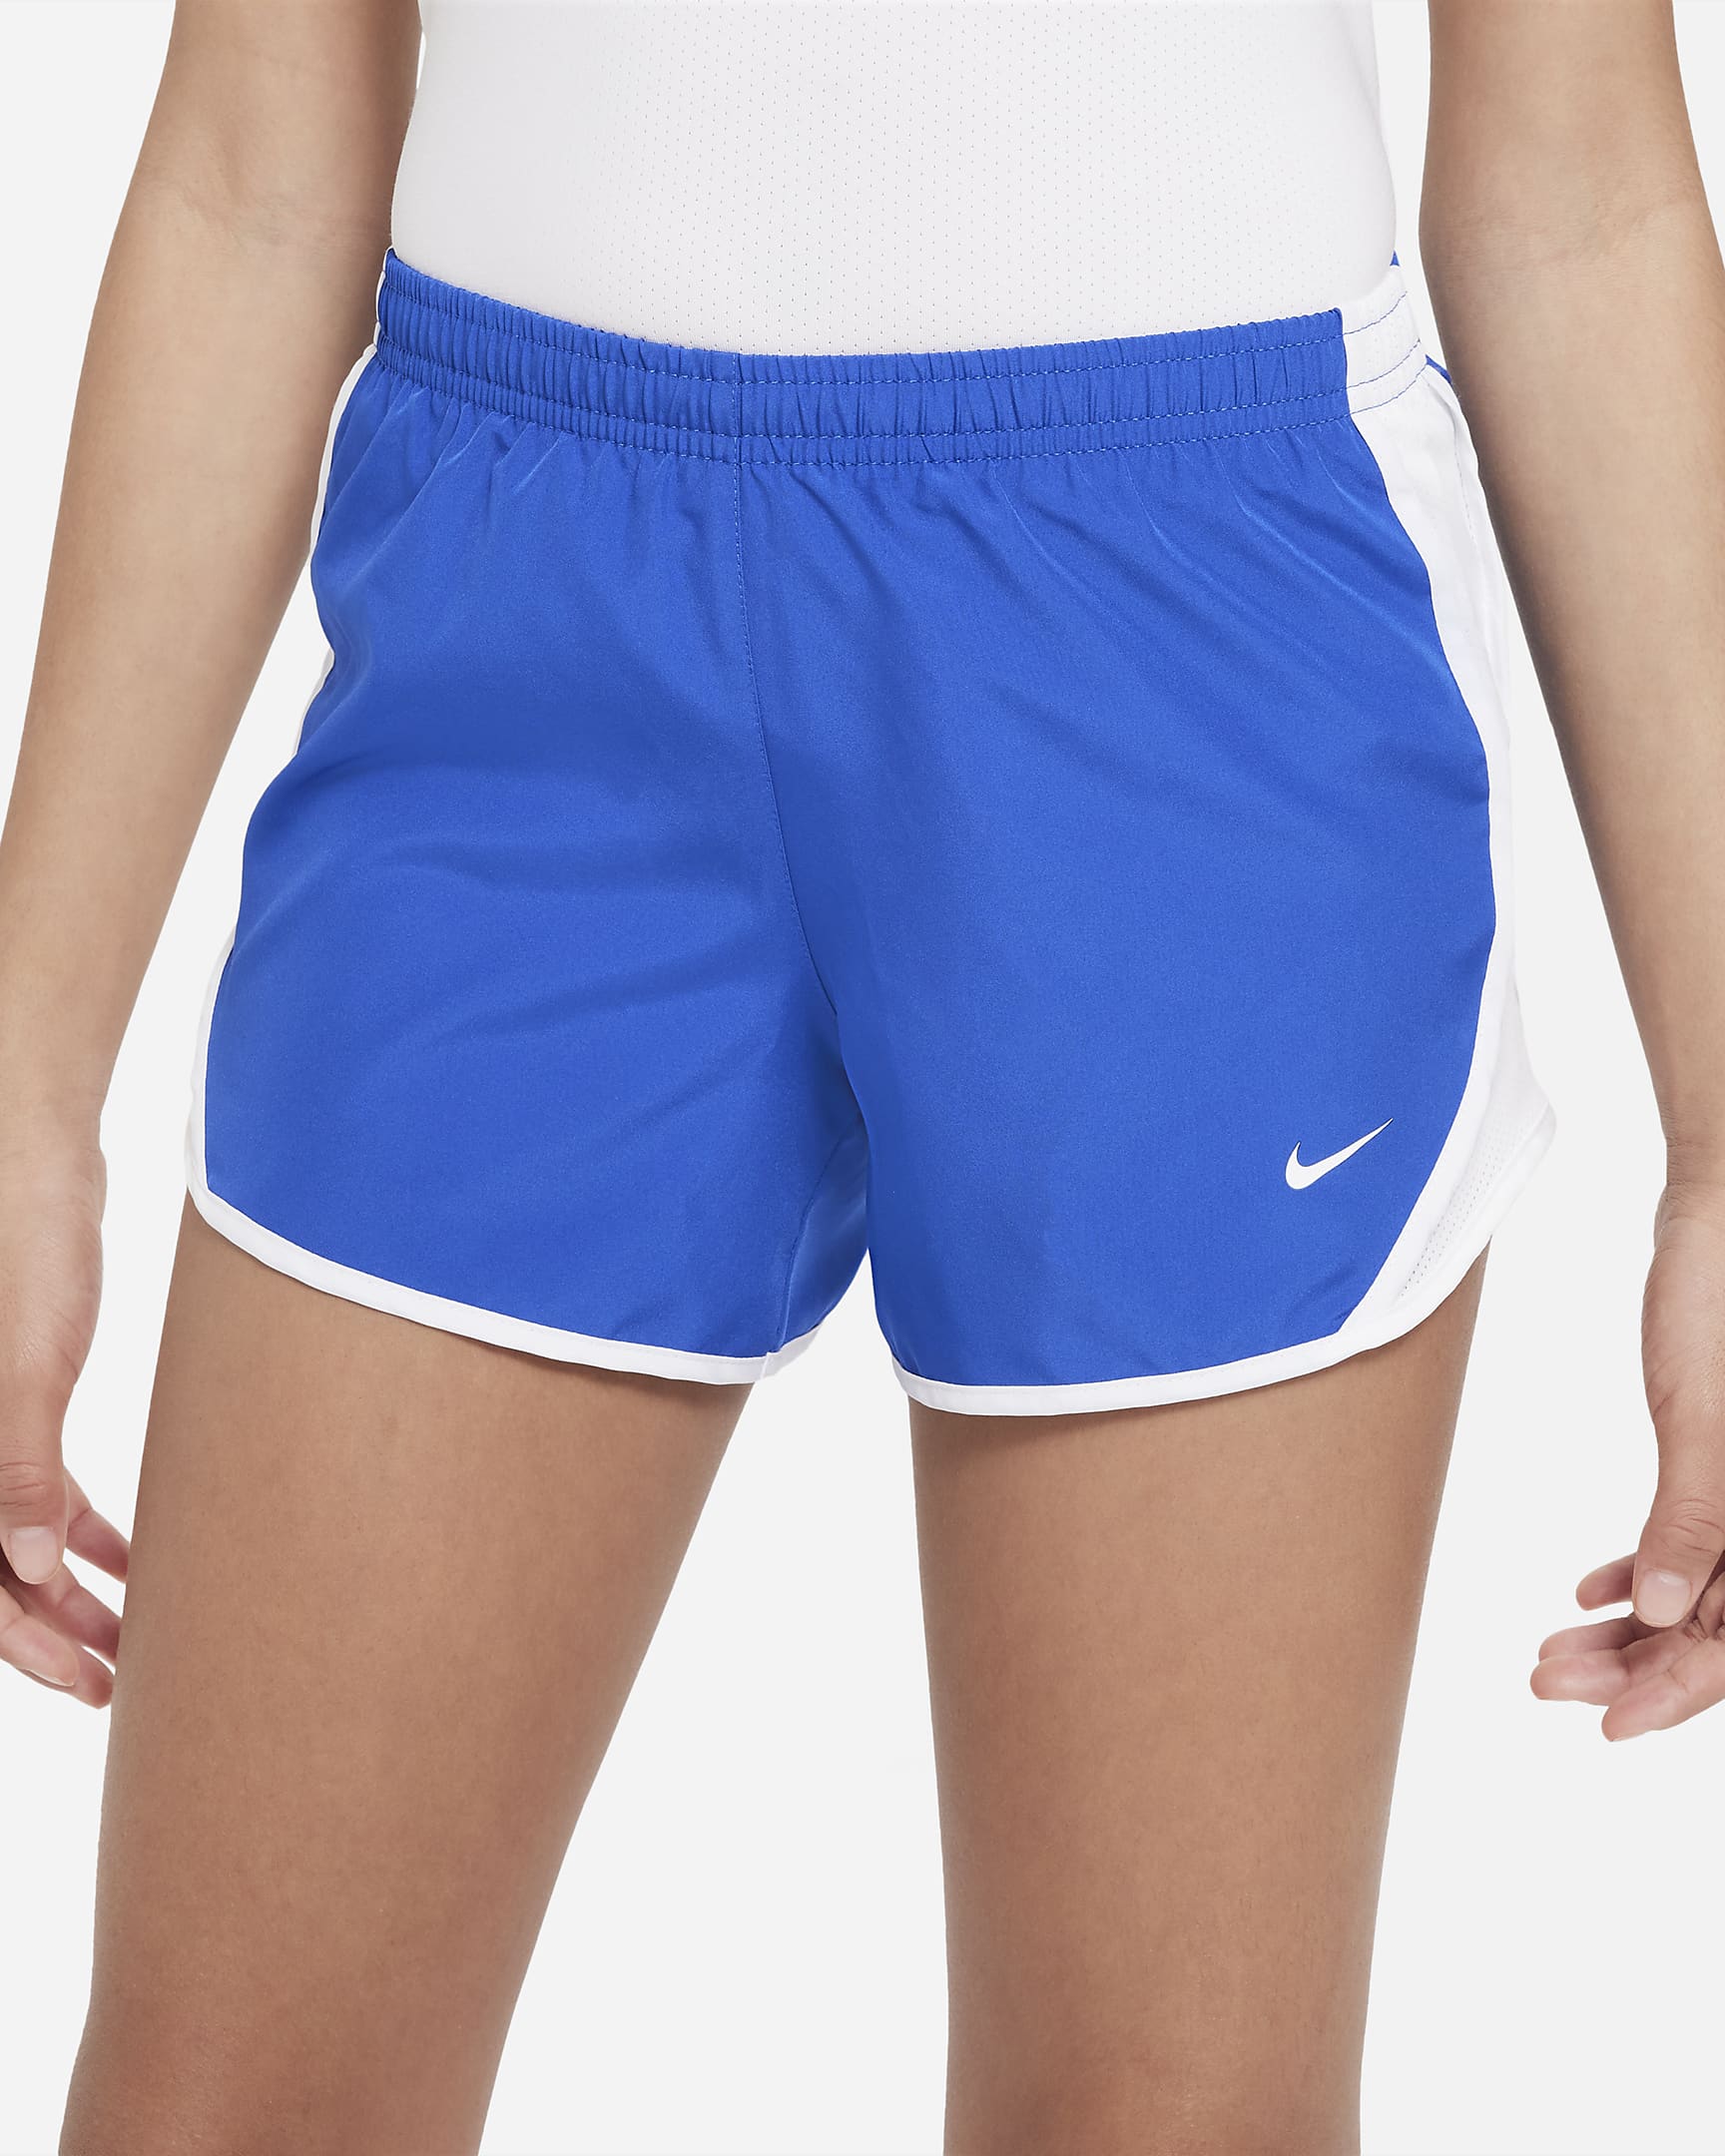 Nike Girls Tempo Shorts - 848196